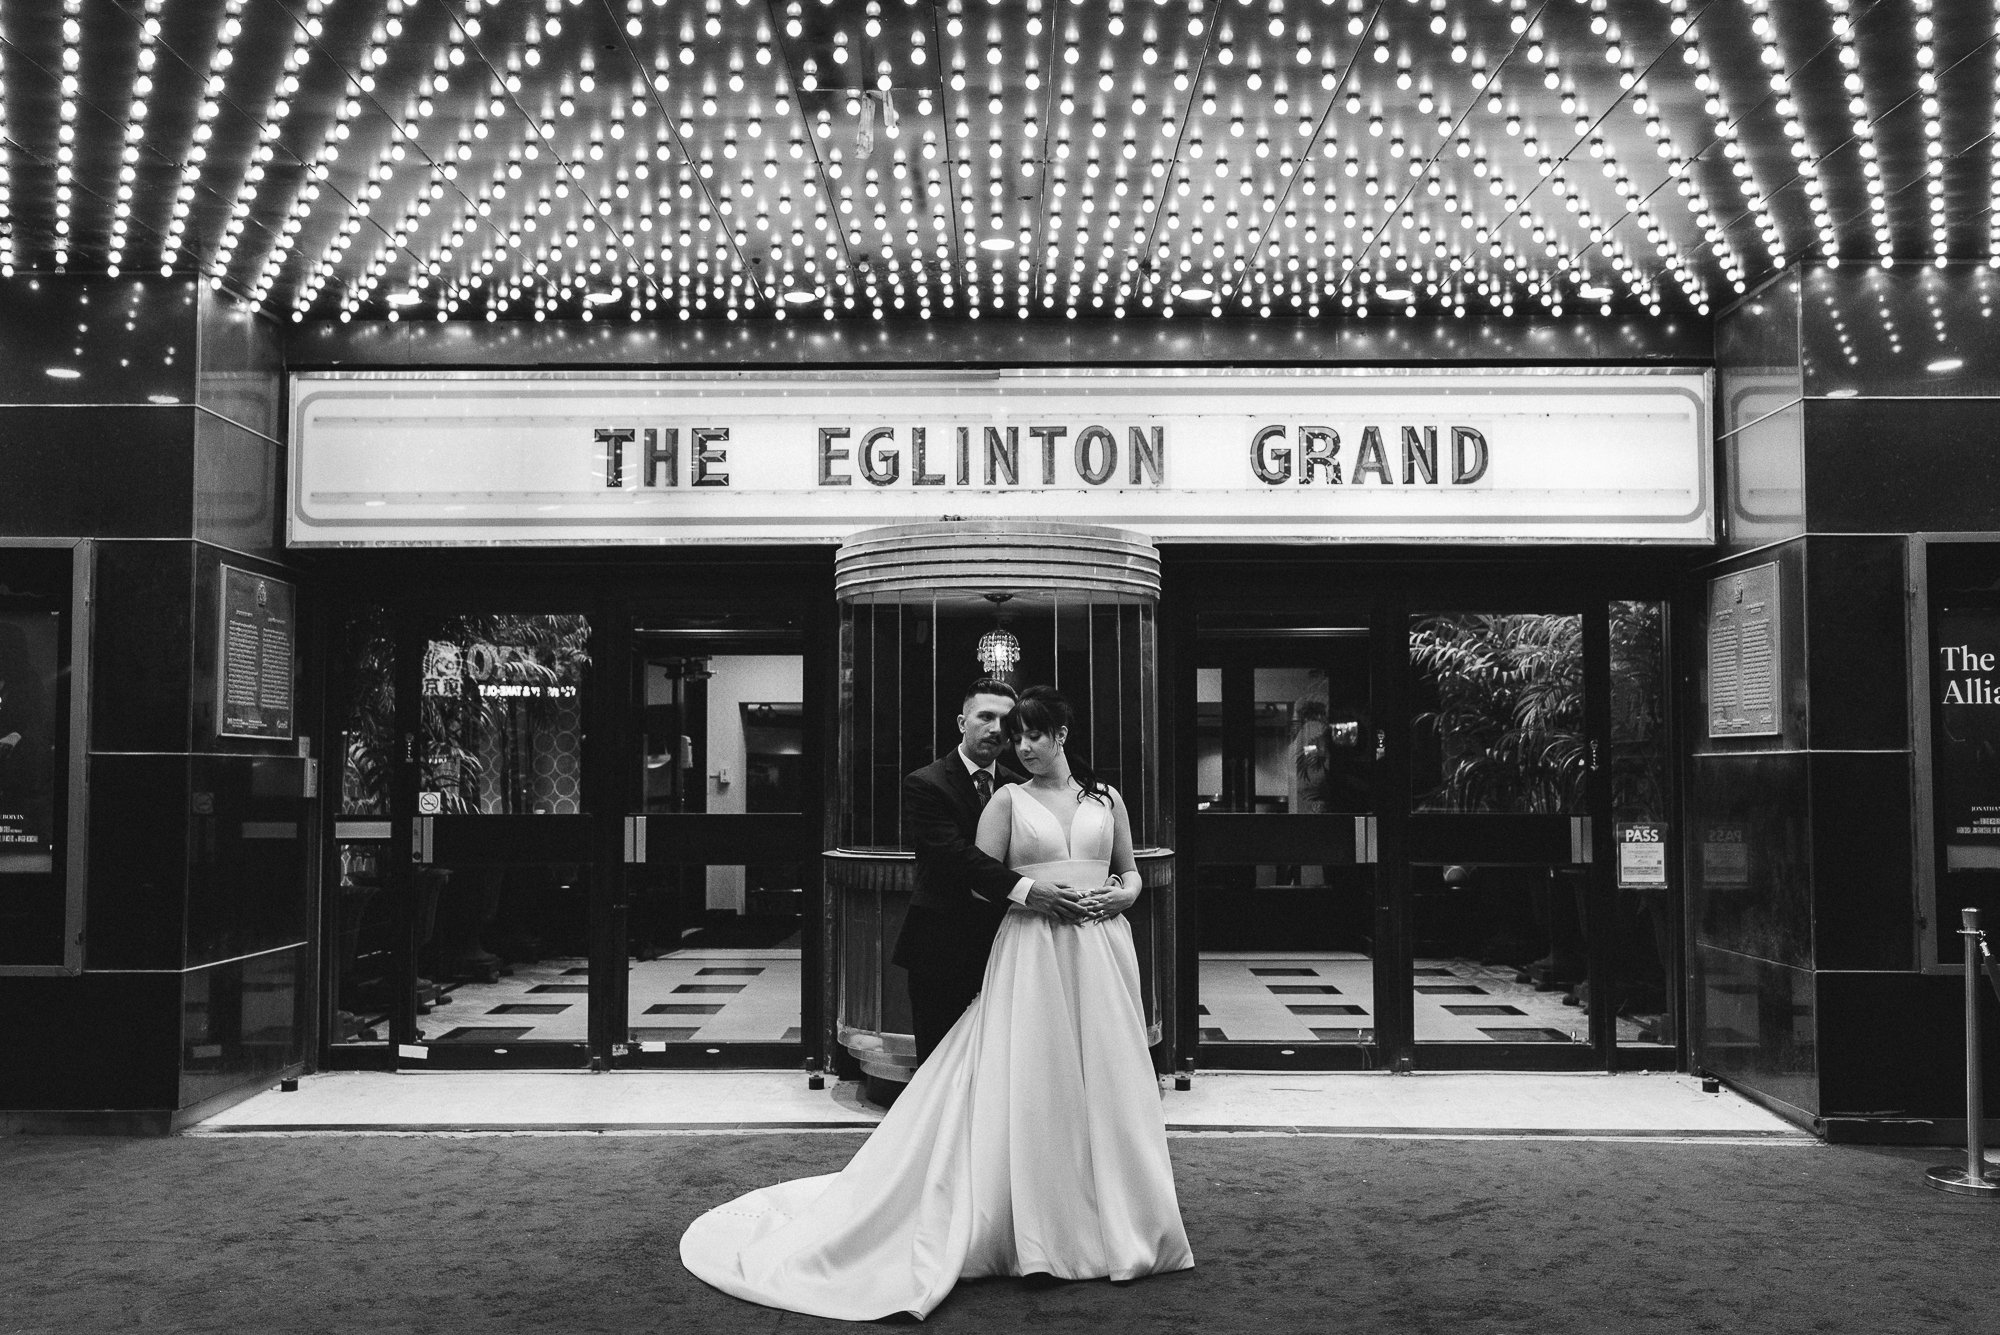 697_JG_eglinton grand theatre_toronto_wedding_CY24754.JPG